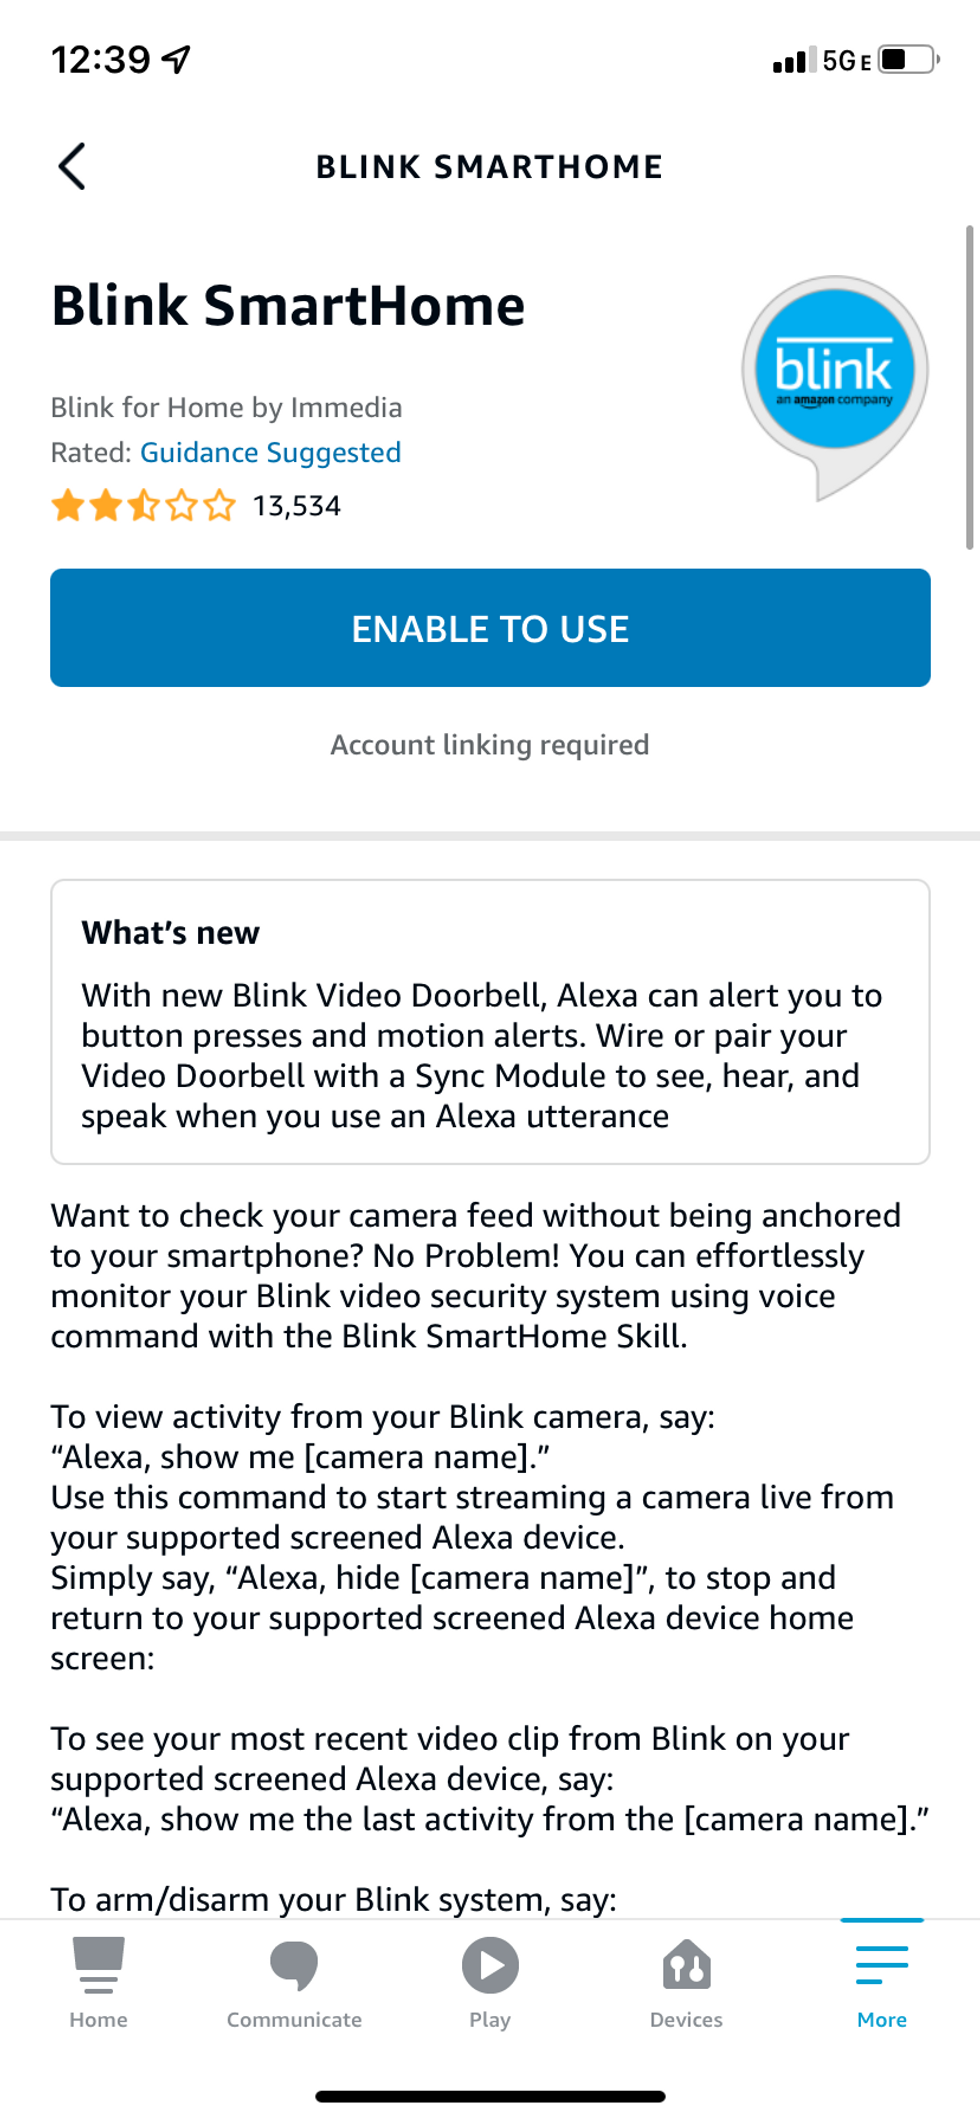 screenshot of enabling Alexa skill for Blink in Alexa app